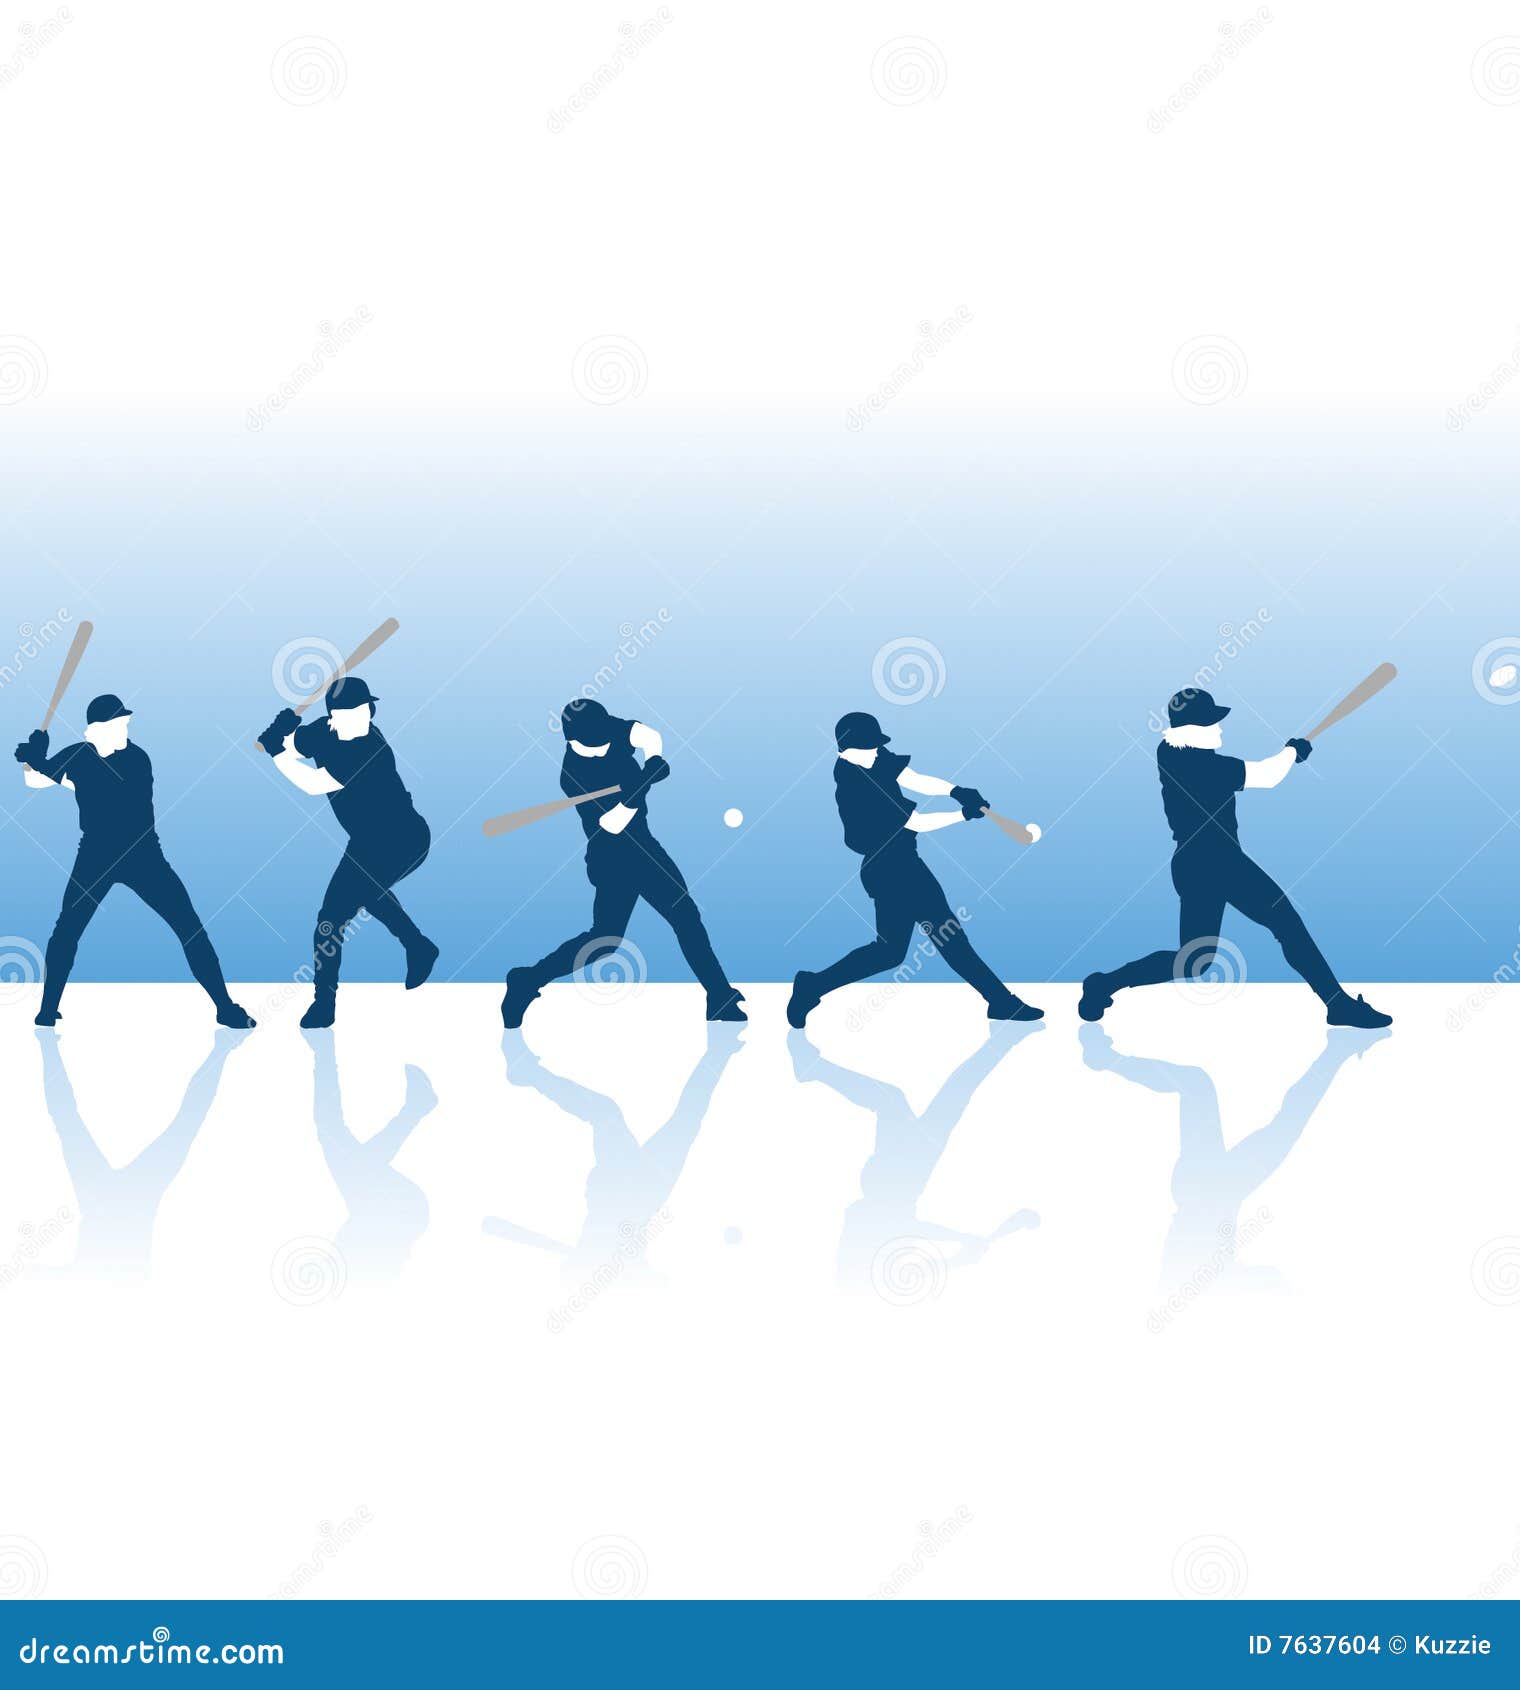 Basebal Swing. Sequential vector image of baseball player swinging his bat